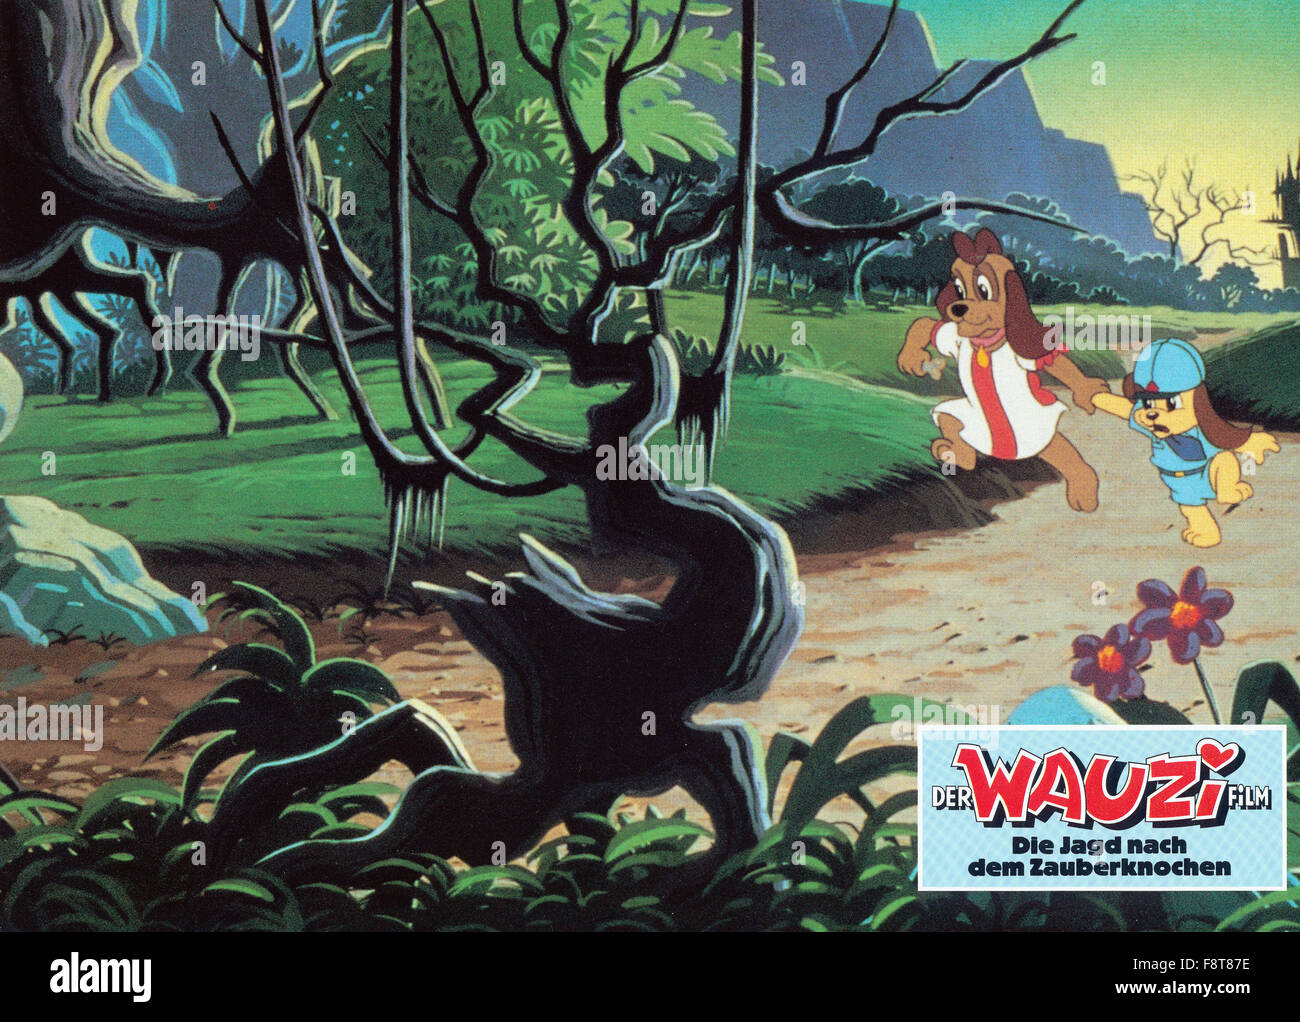 Der Wauzi-Film, Die Jagd nach dem Zauberknochen aka Pound Puppies and the  Legend of Big Paw, USA 1998, Regie: Pierre DeCelles, Szenenfoto Stock Photo  - Alamy